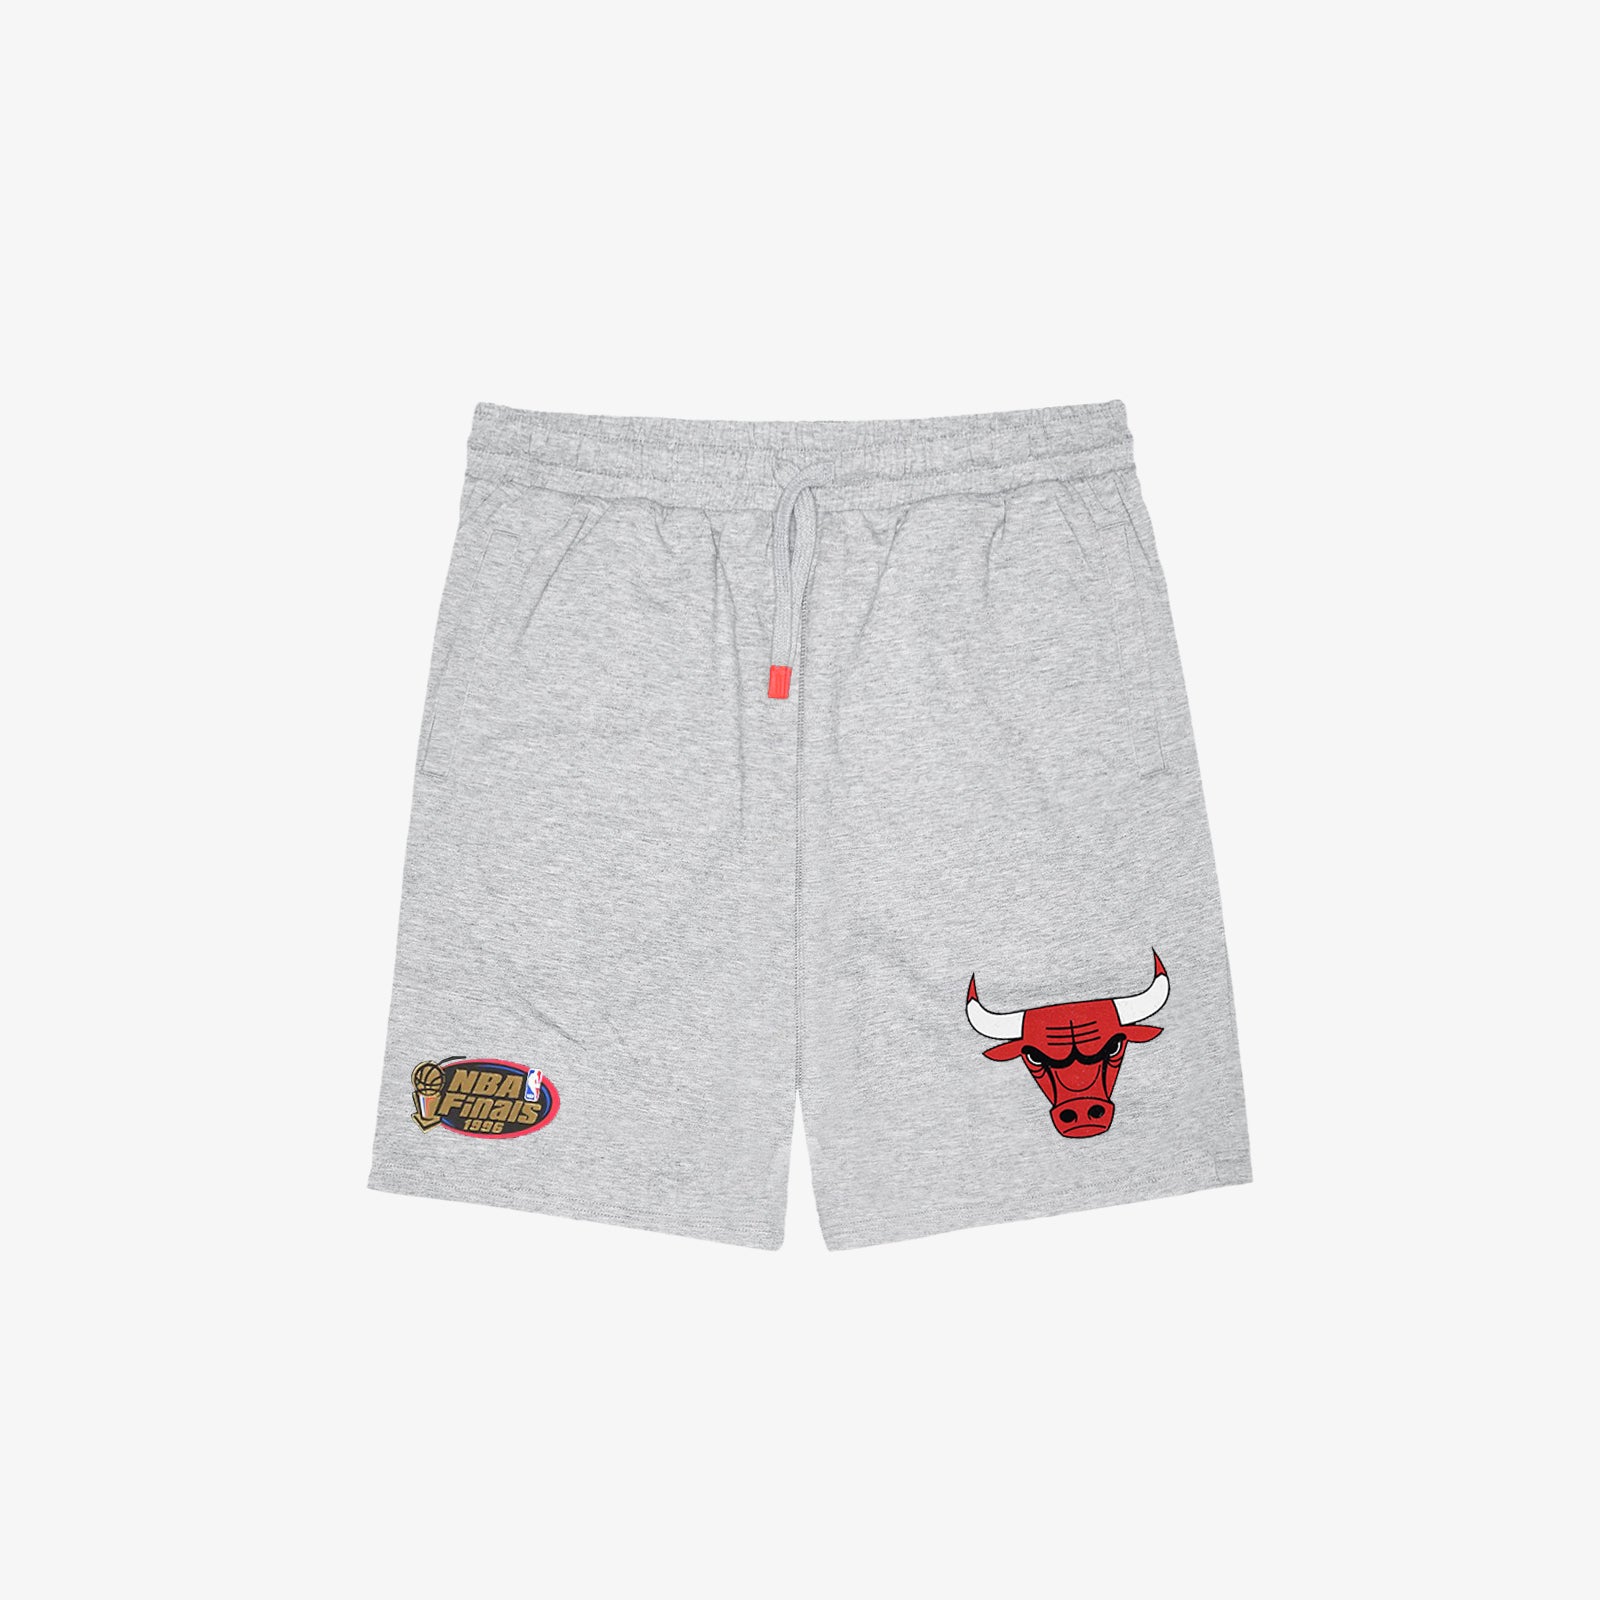 Bulls Shorts – The Lost Breed